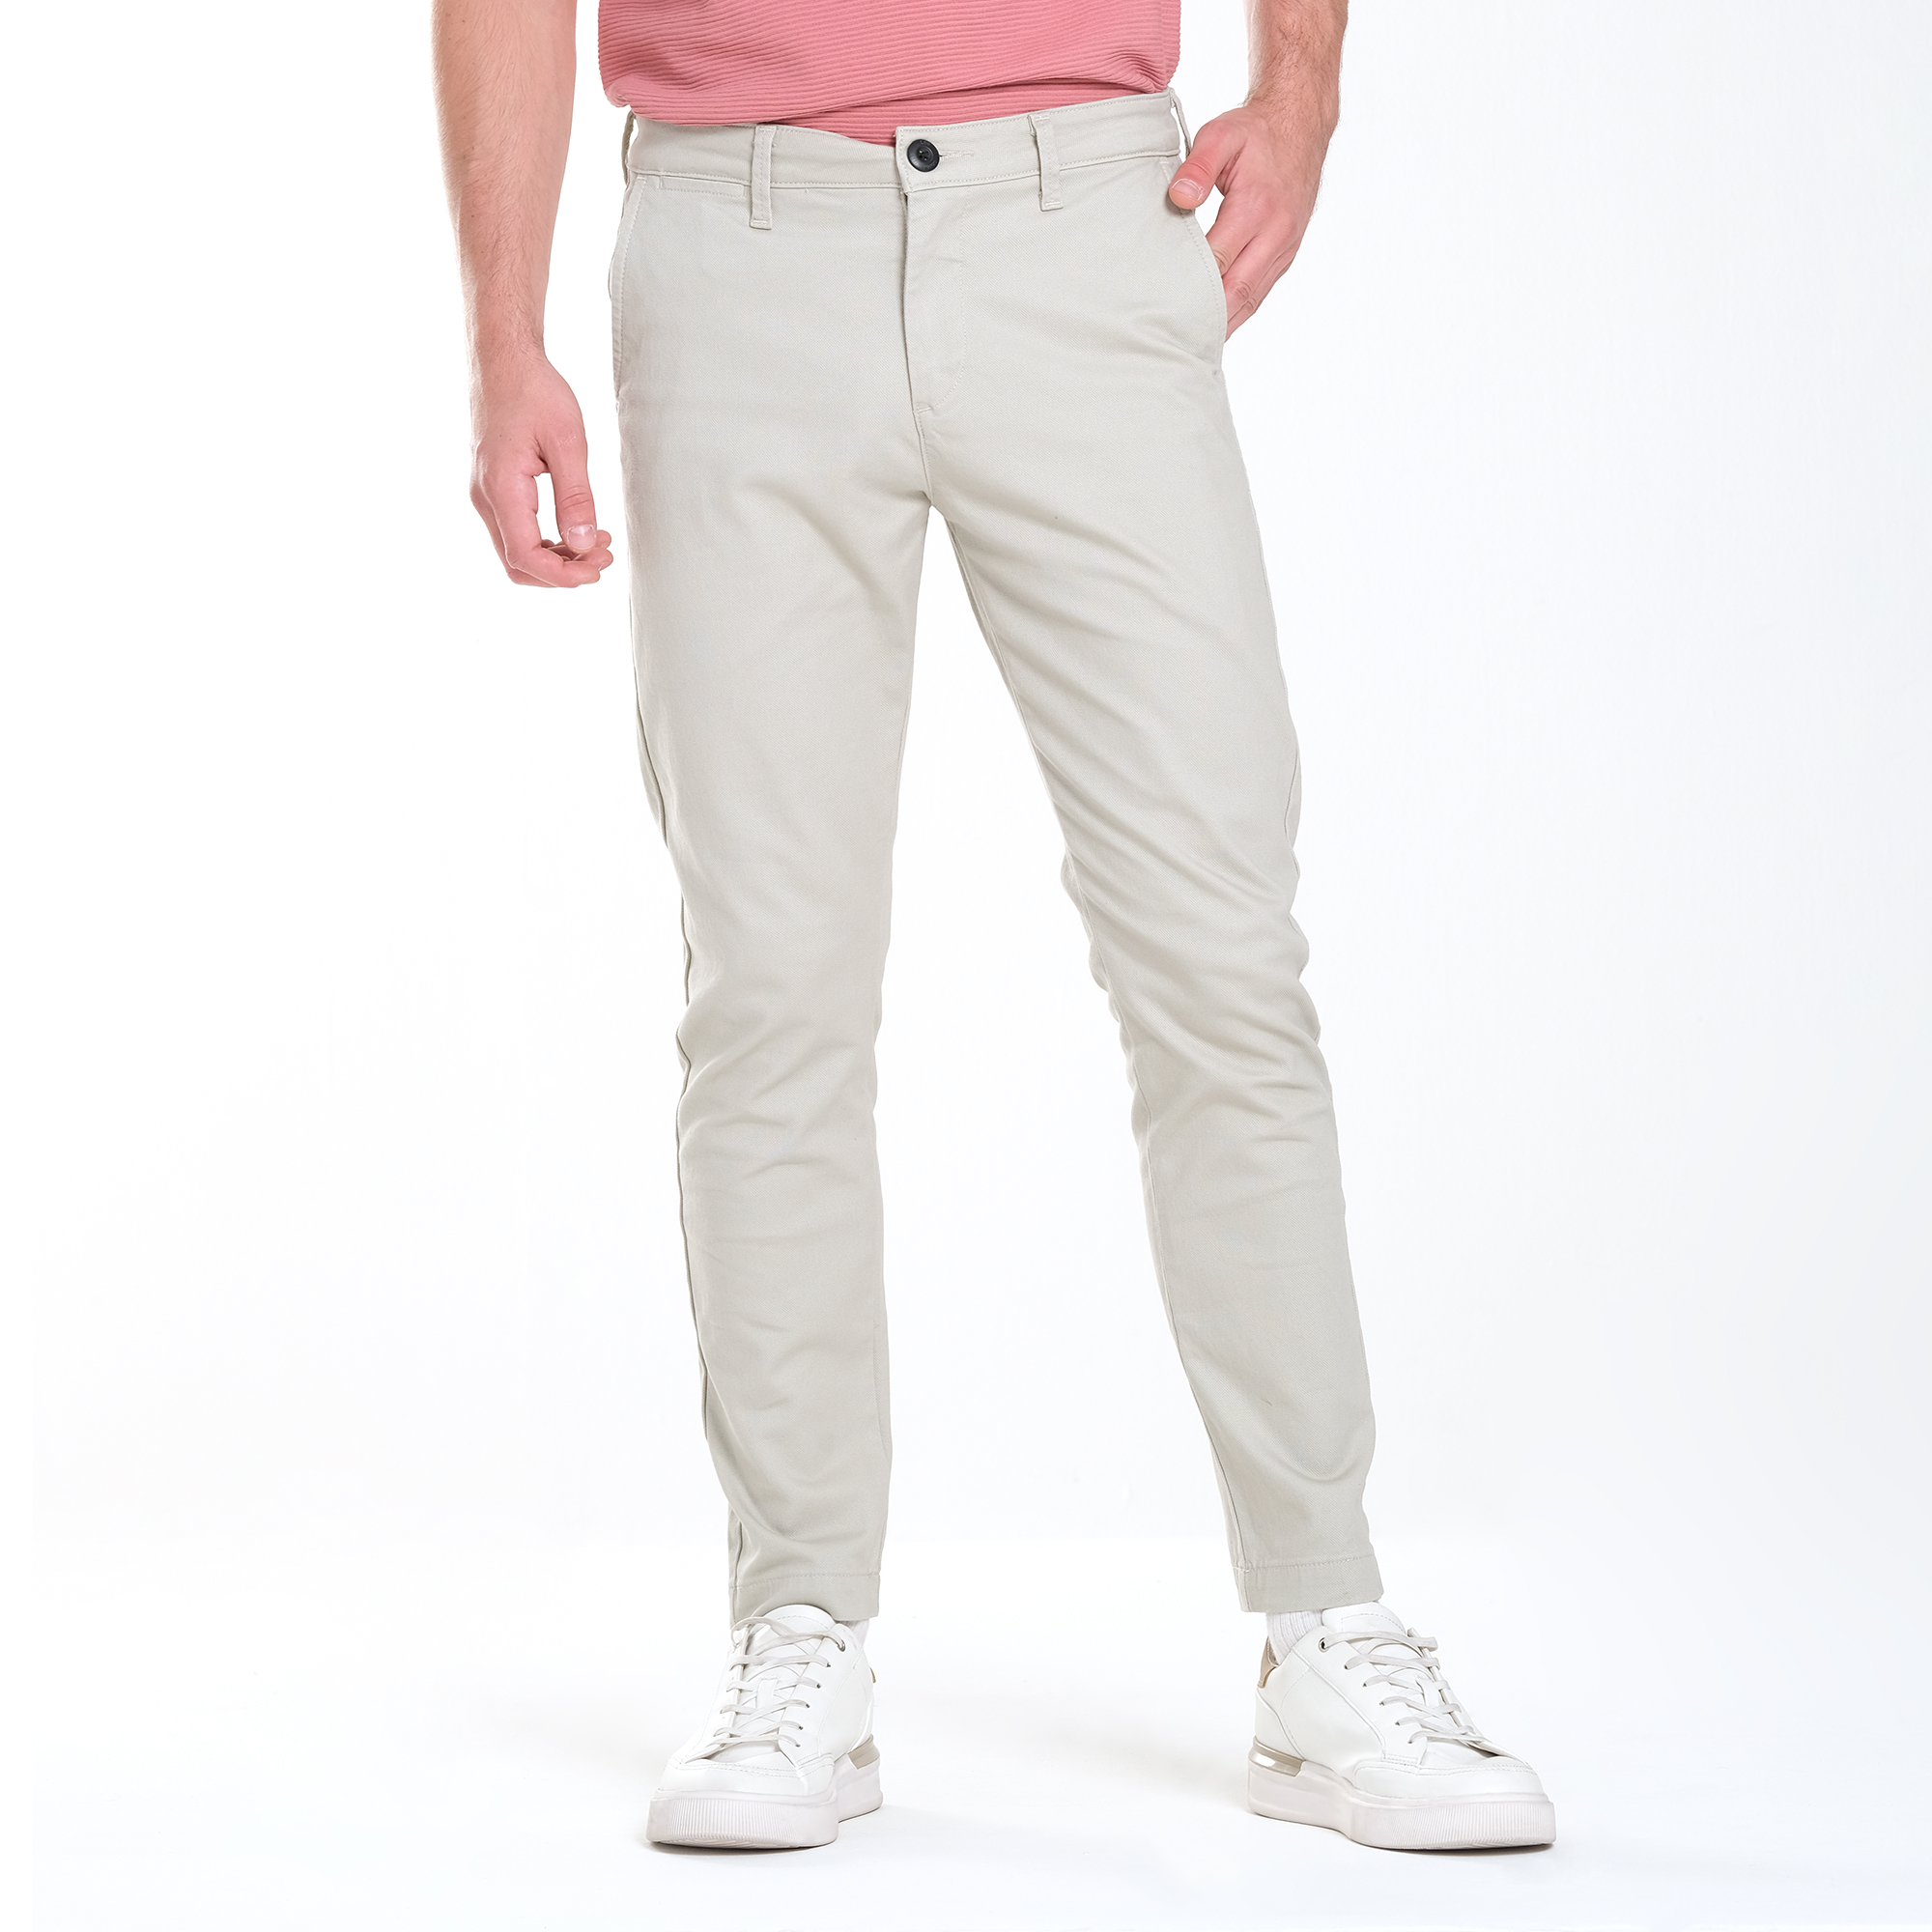 Men's Tactical Pants Kestrel - Grey - Size 34 - Inseam 28 - A Cut Above  Uniforms